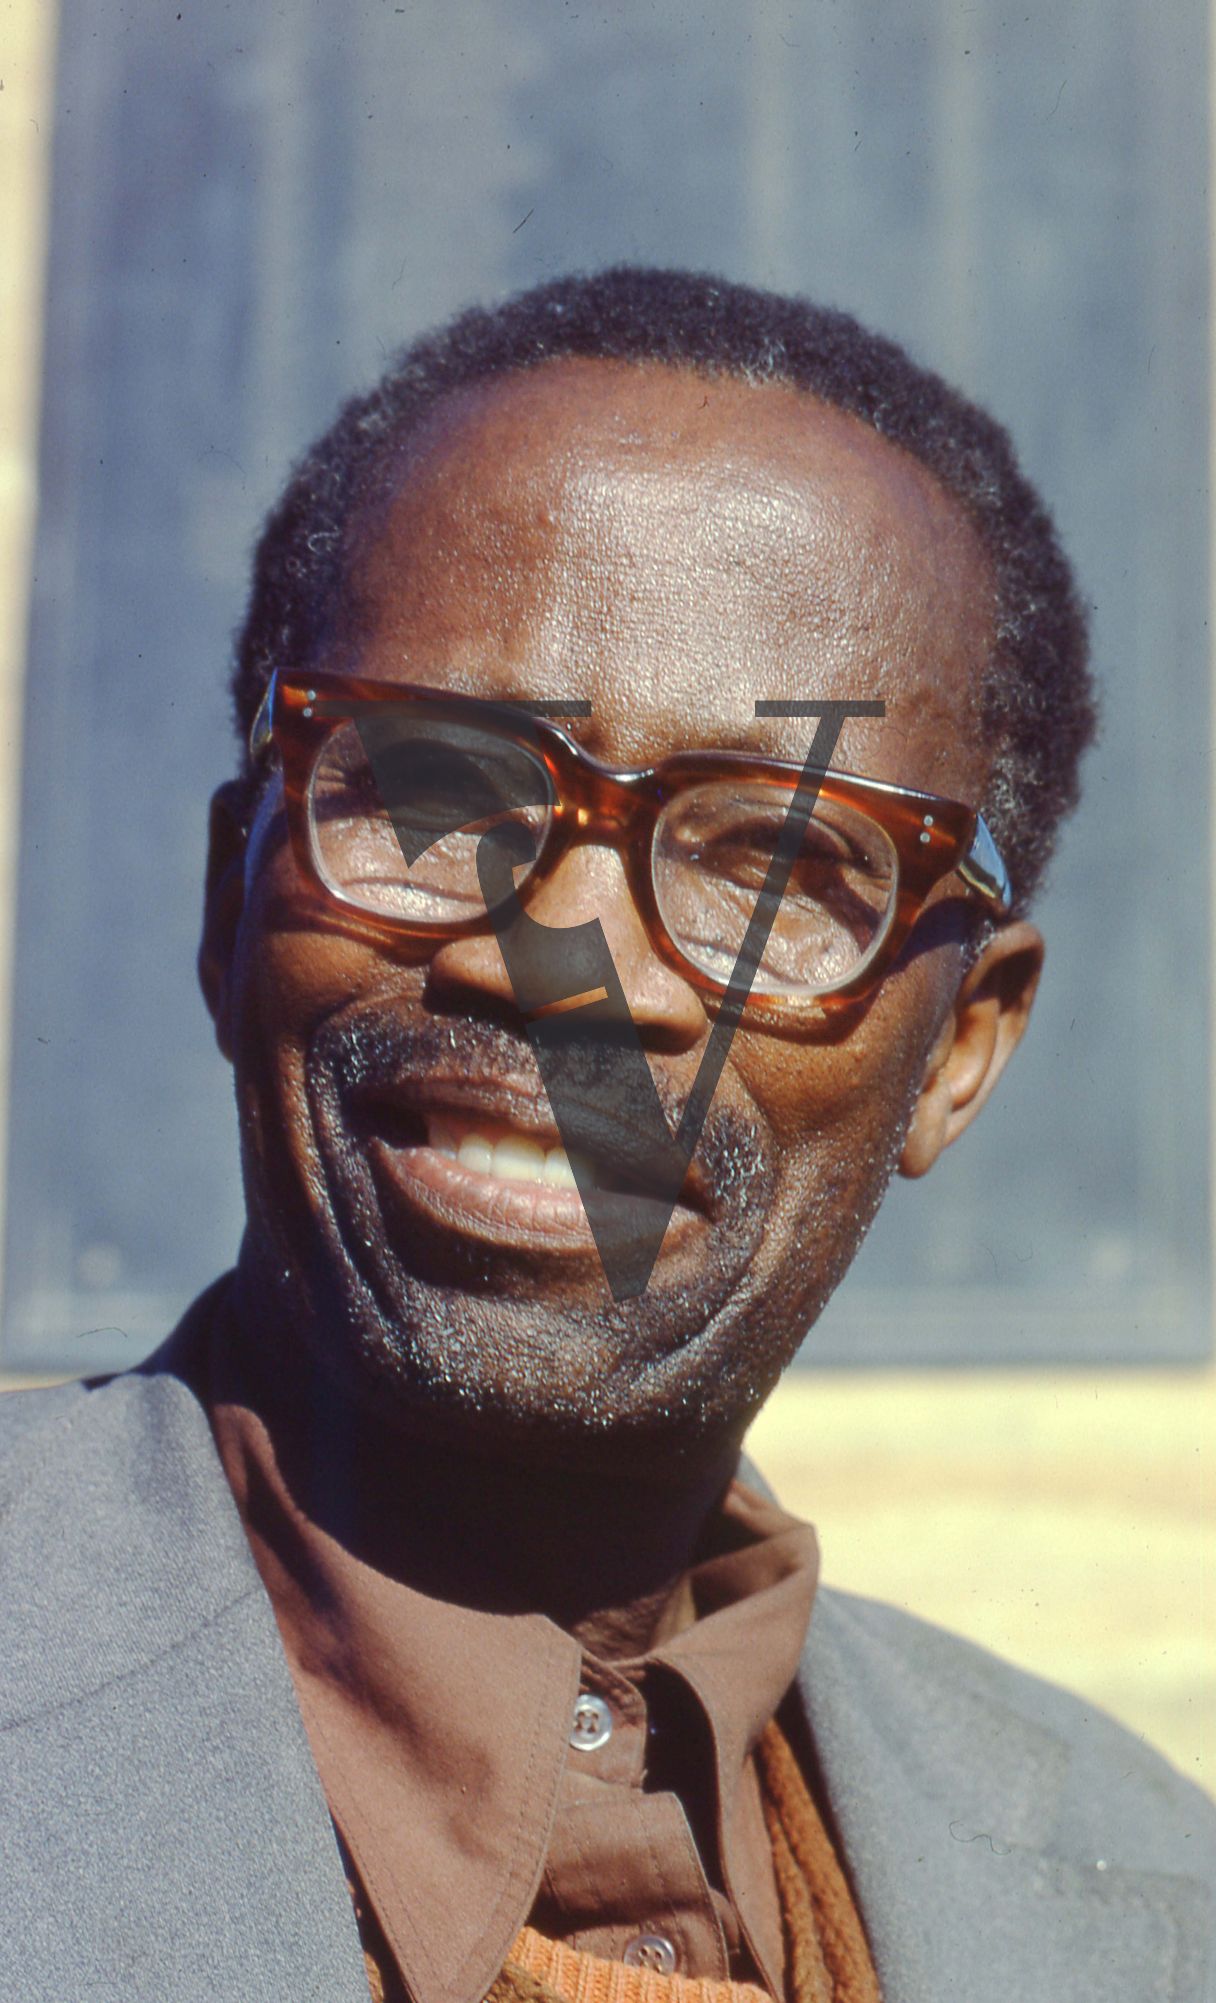 Dhlamini, PAC, Pan Africanist Congress camp, portrait.